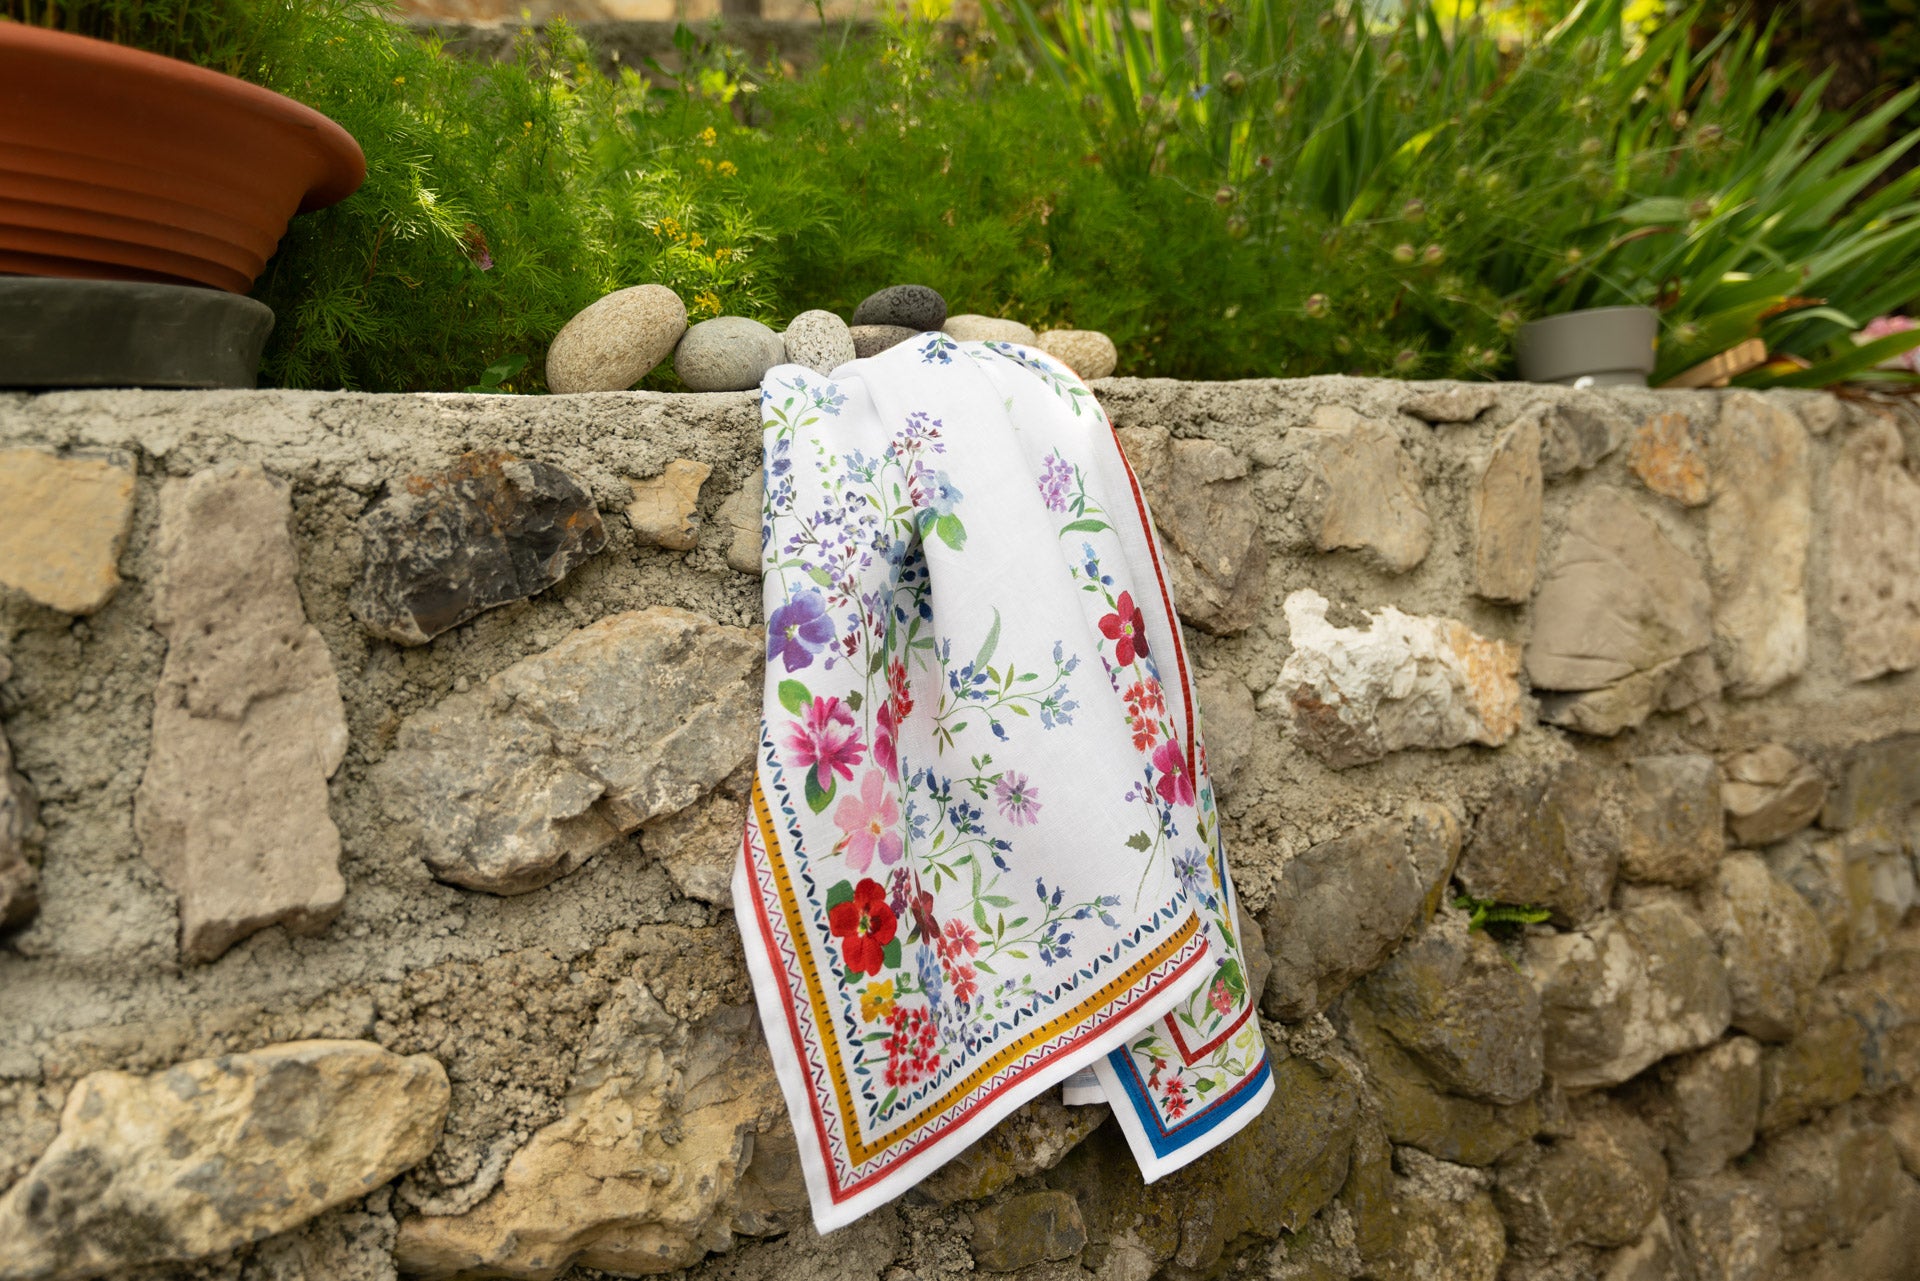 Tessitura Toscana Telerie, “Primula - Rosso”, Pure linen printed tea towel.